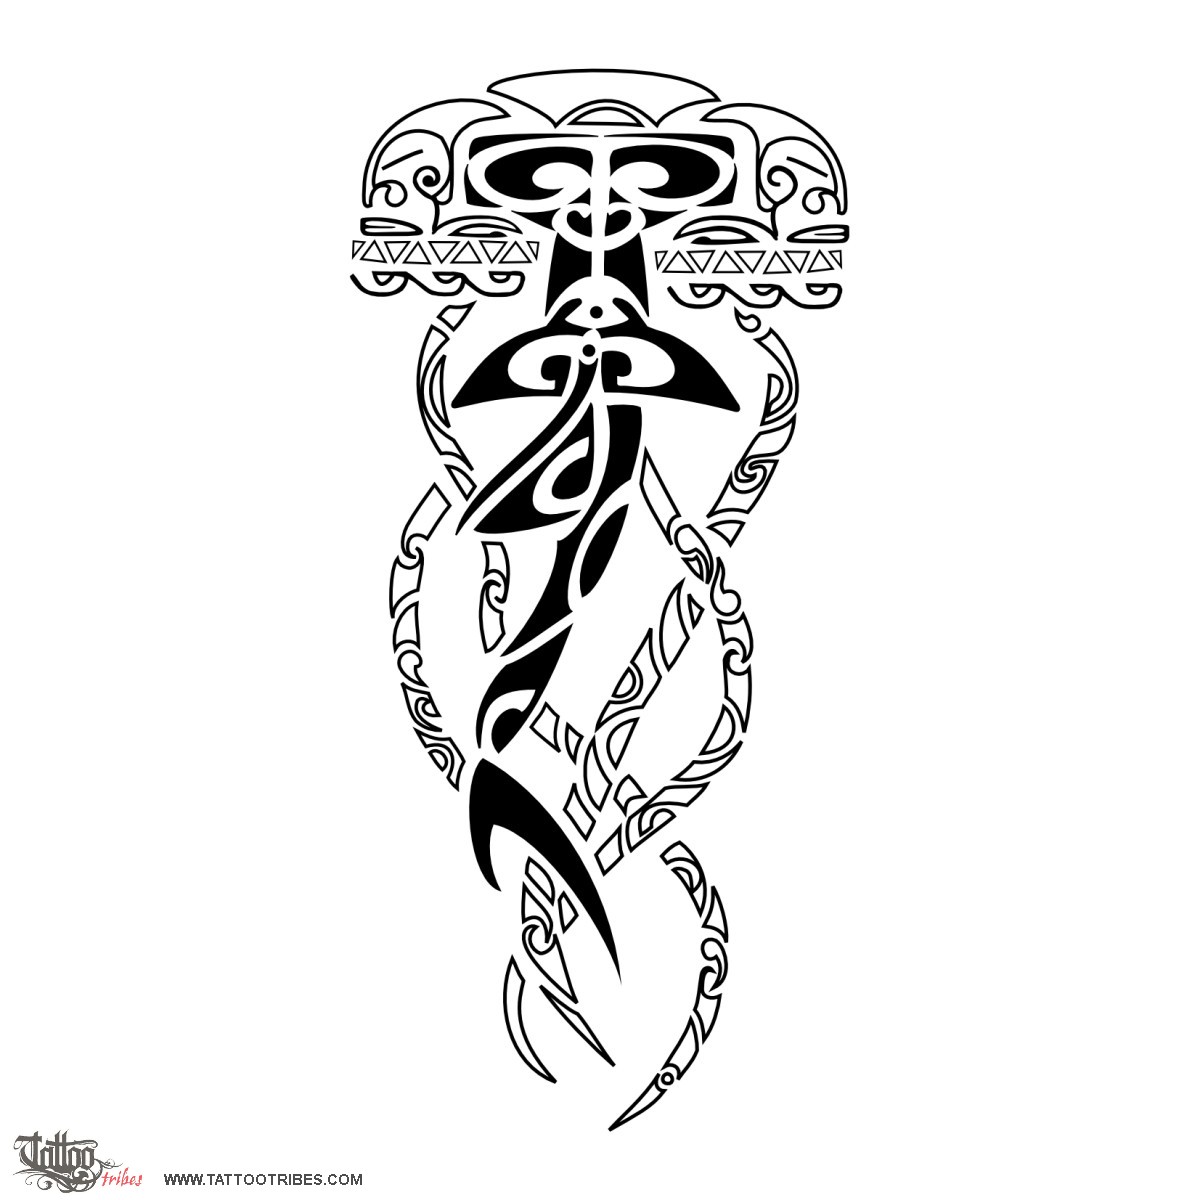 520 Jellyfish Tattoo Drawings Illustrations RoyaltyFree Vector Graphics   Clip Art  iStock